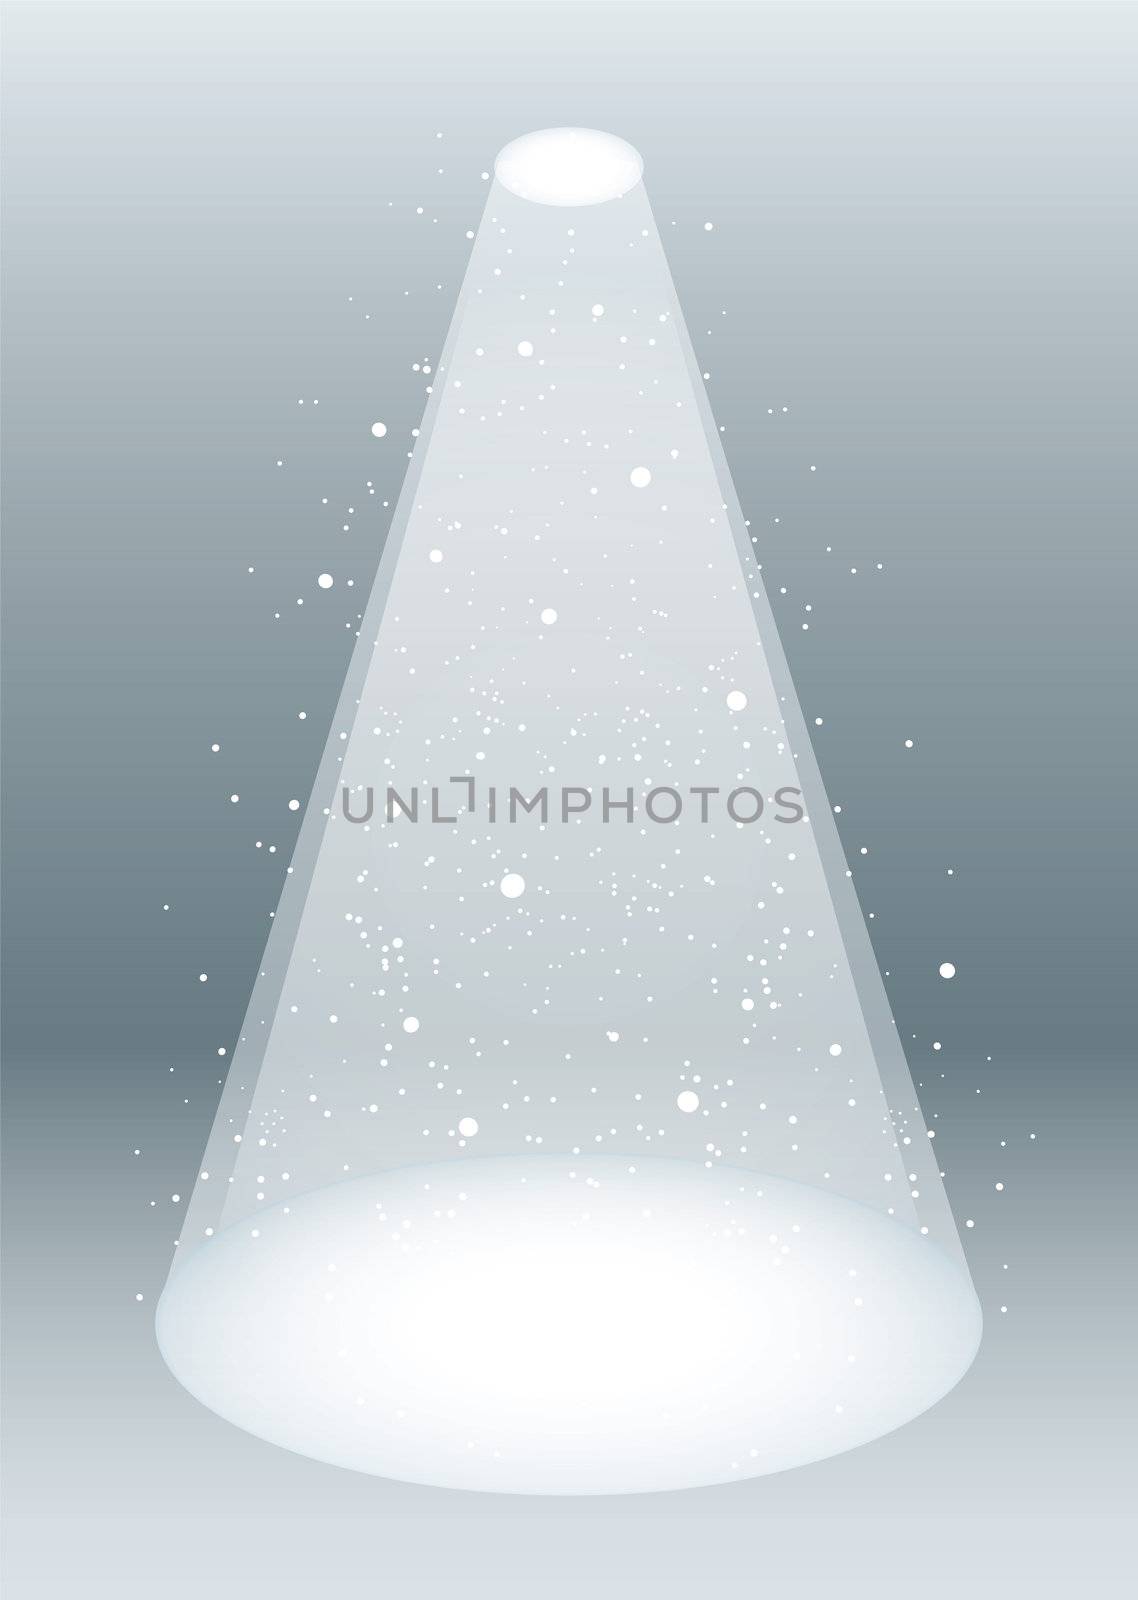 Snow falling in a white spotlight concept